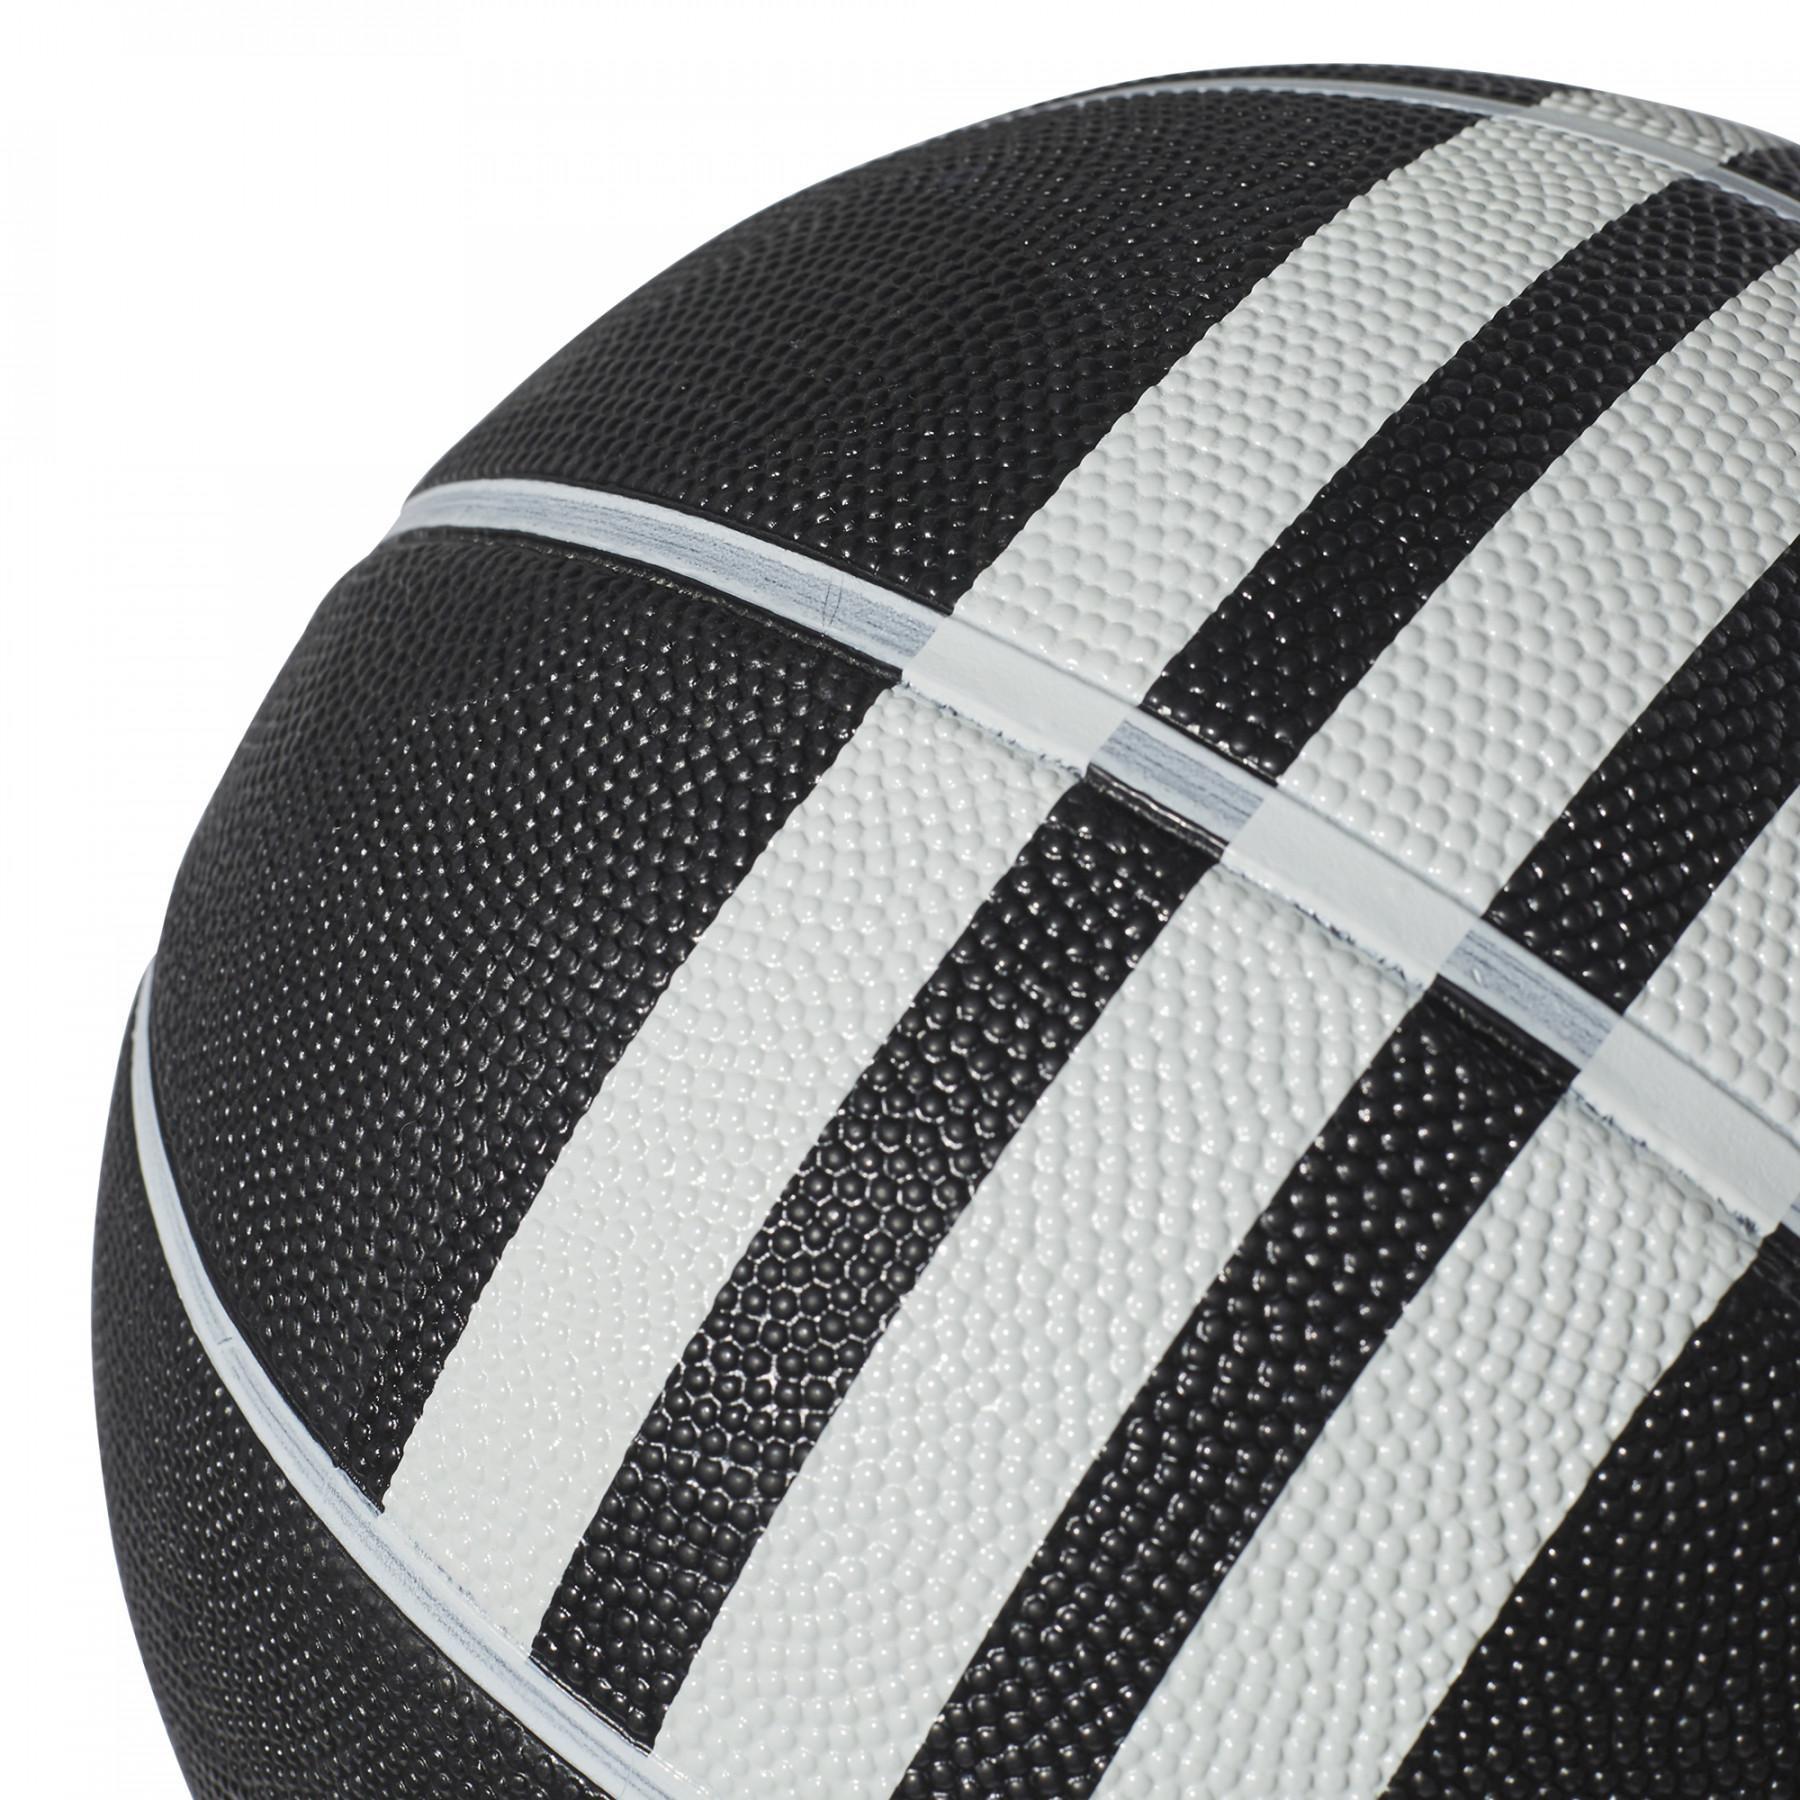 Baloncesto adidas 3-Stripes Rubber X